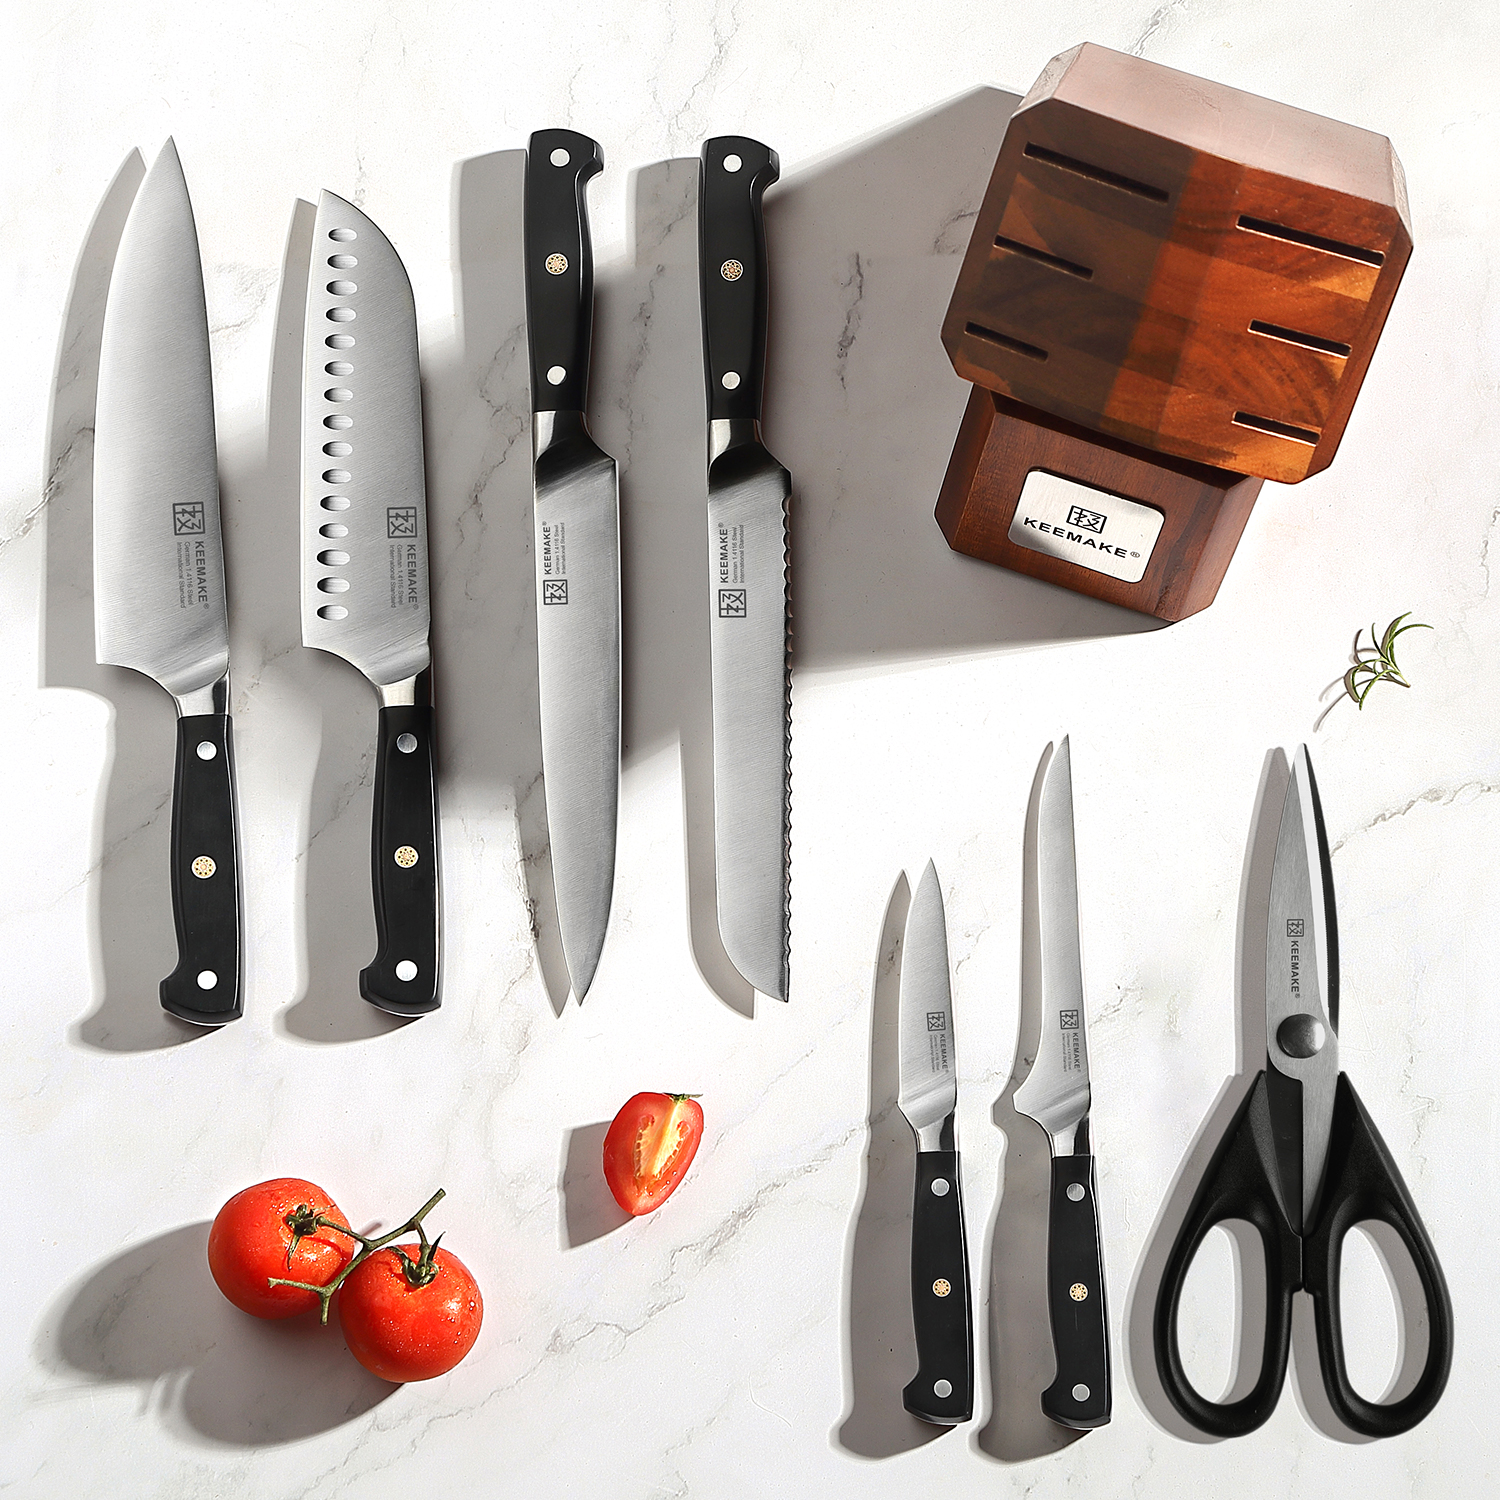 8pcs Kitchen Knife Set with Knife Block